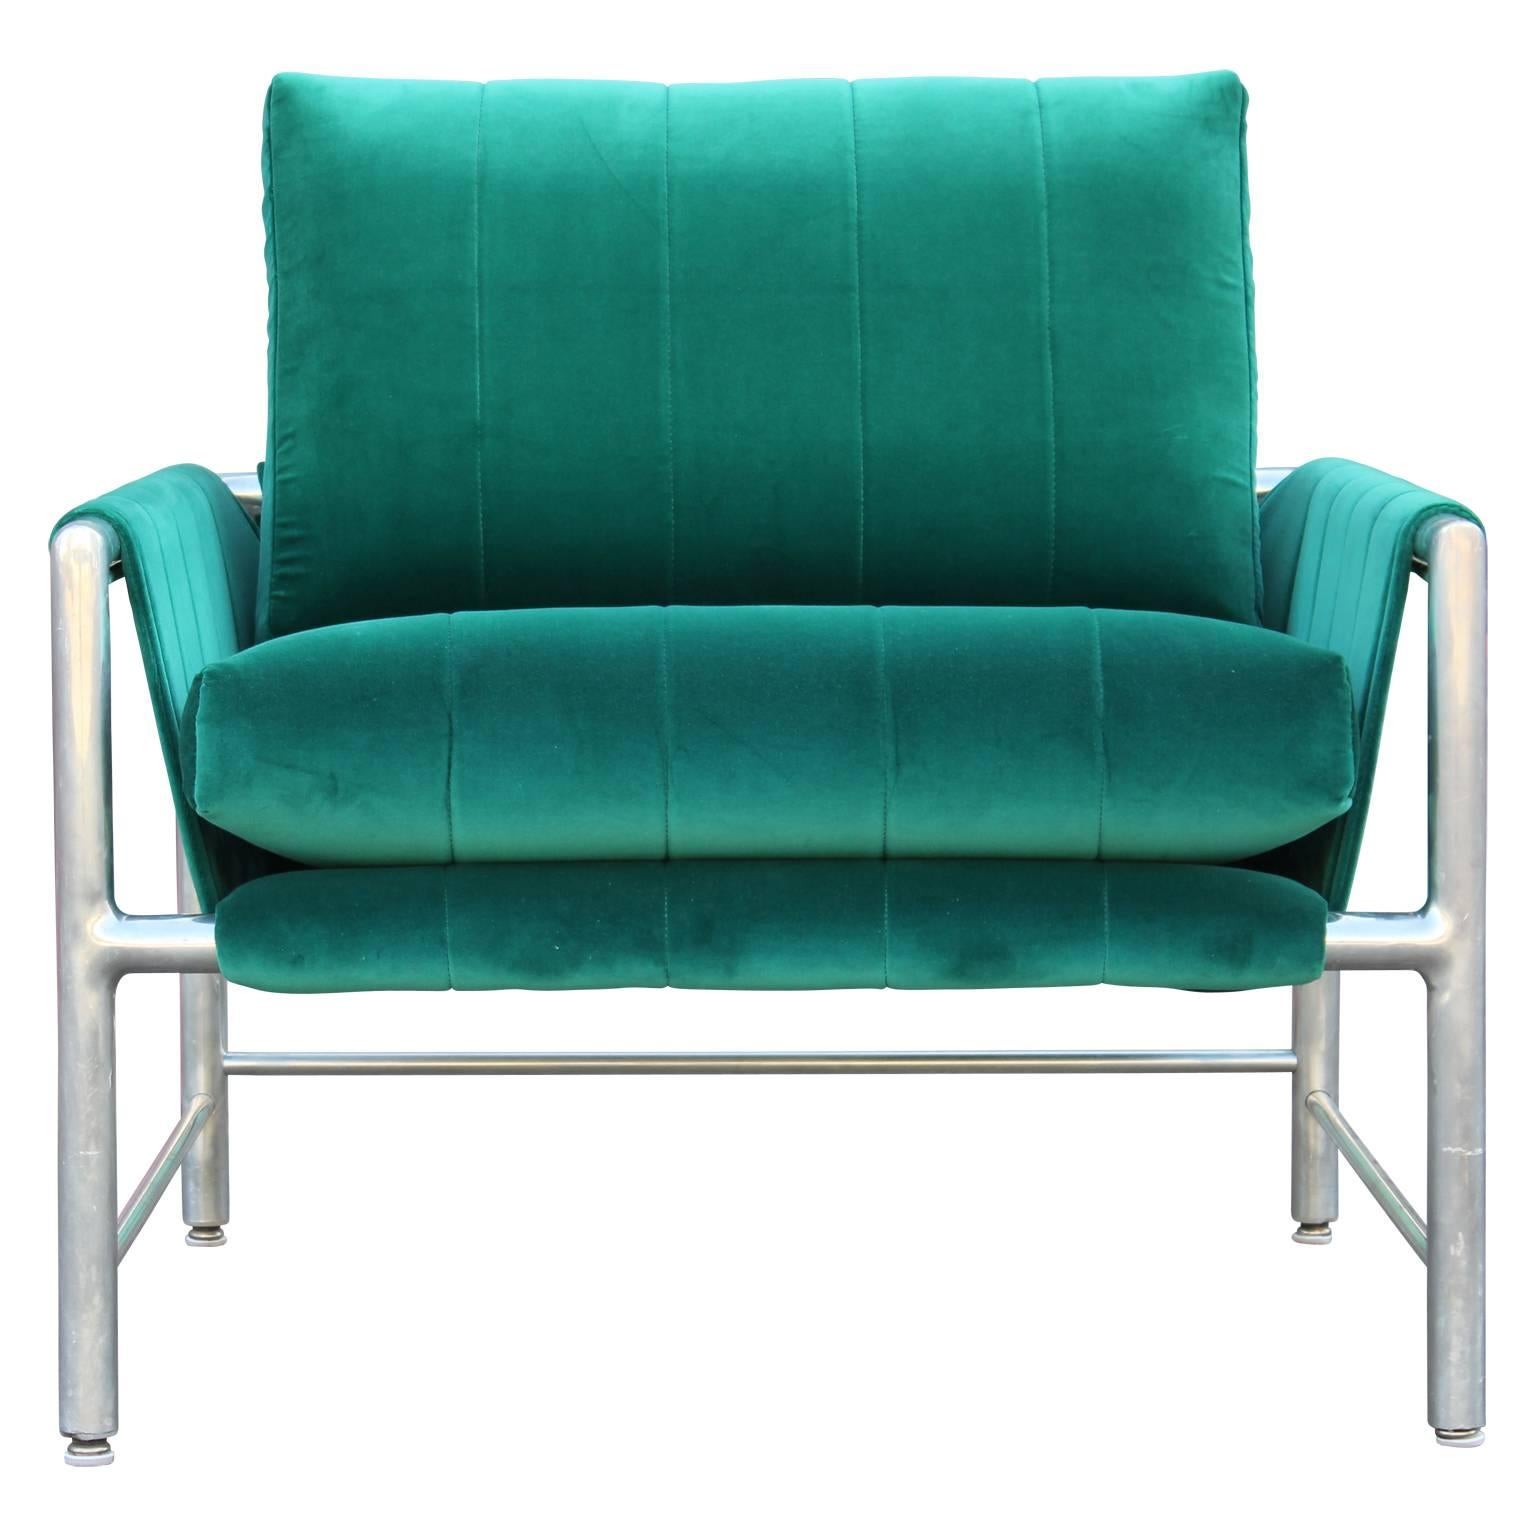 Stunning Milo Baughman style aluminum lounge chair freshly upholstered in a lush turquoise teal velvet.